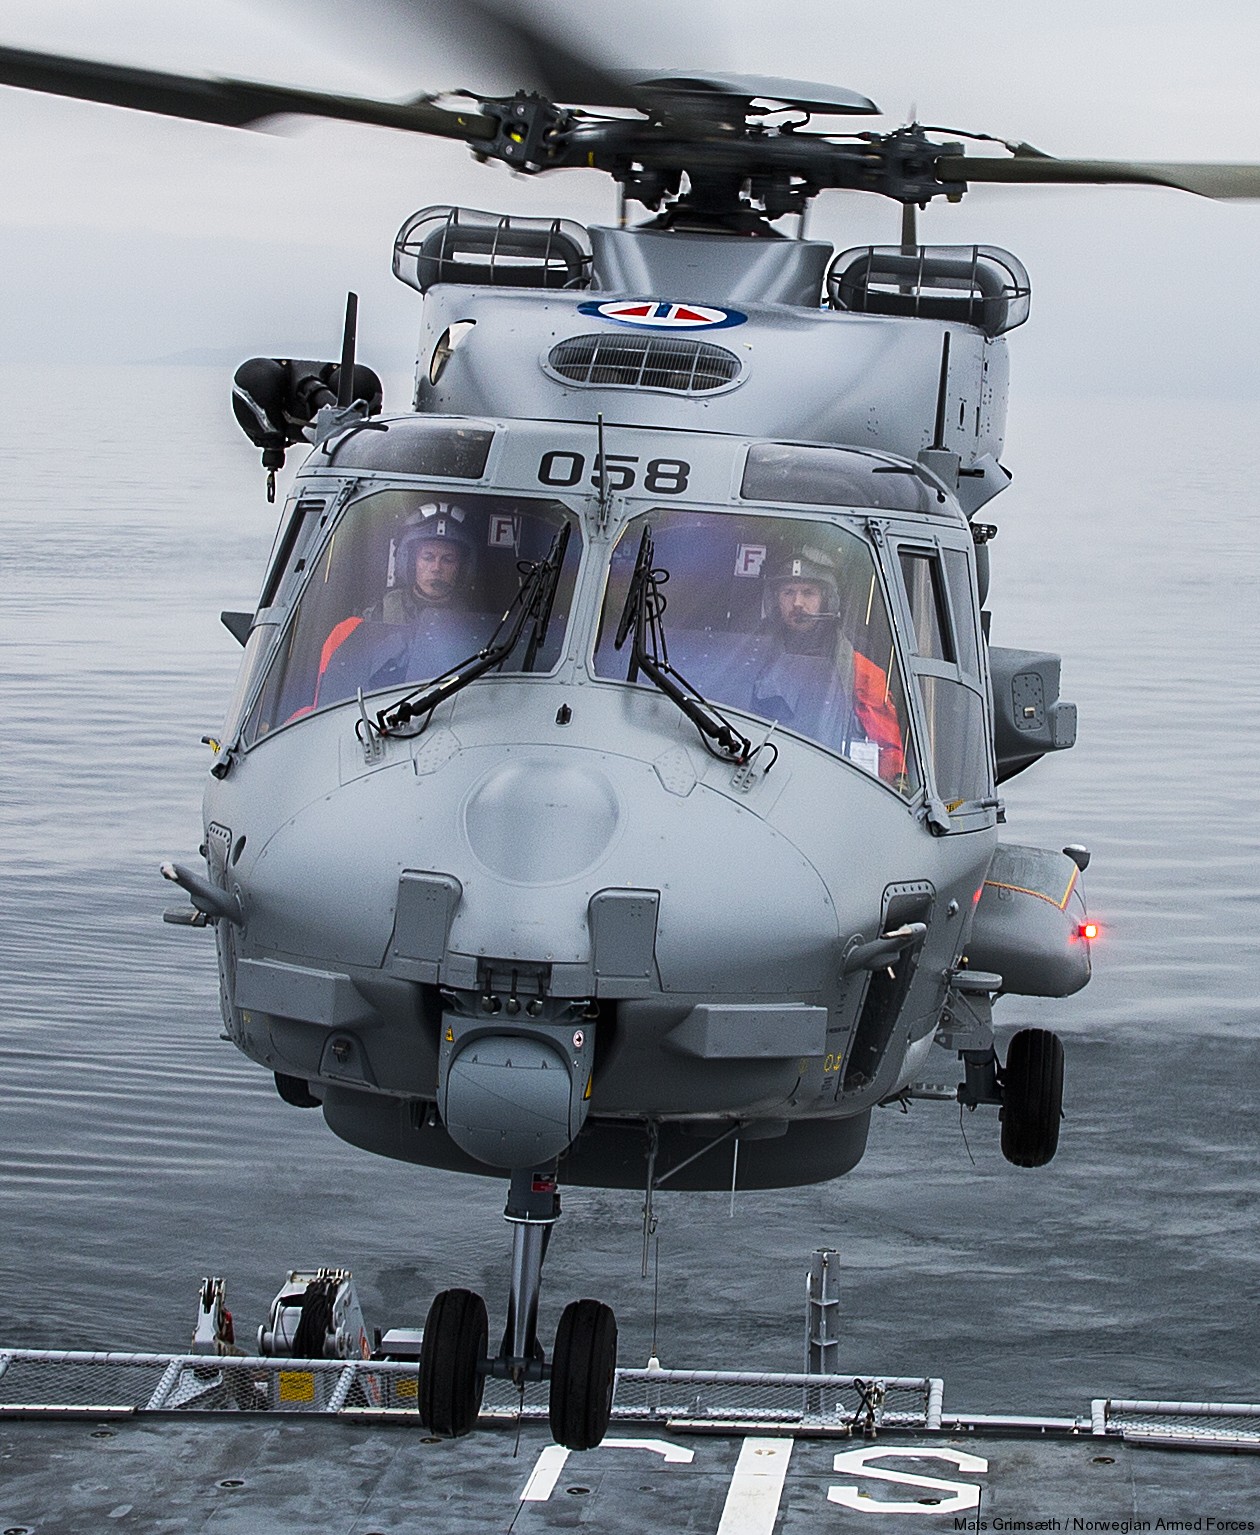 nh90 nfh asw helicopter royal norwegian coast guard navy air force kystvakt sjoforsvaret 058 05